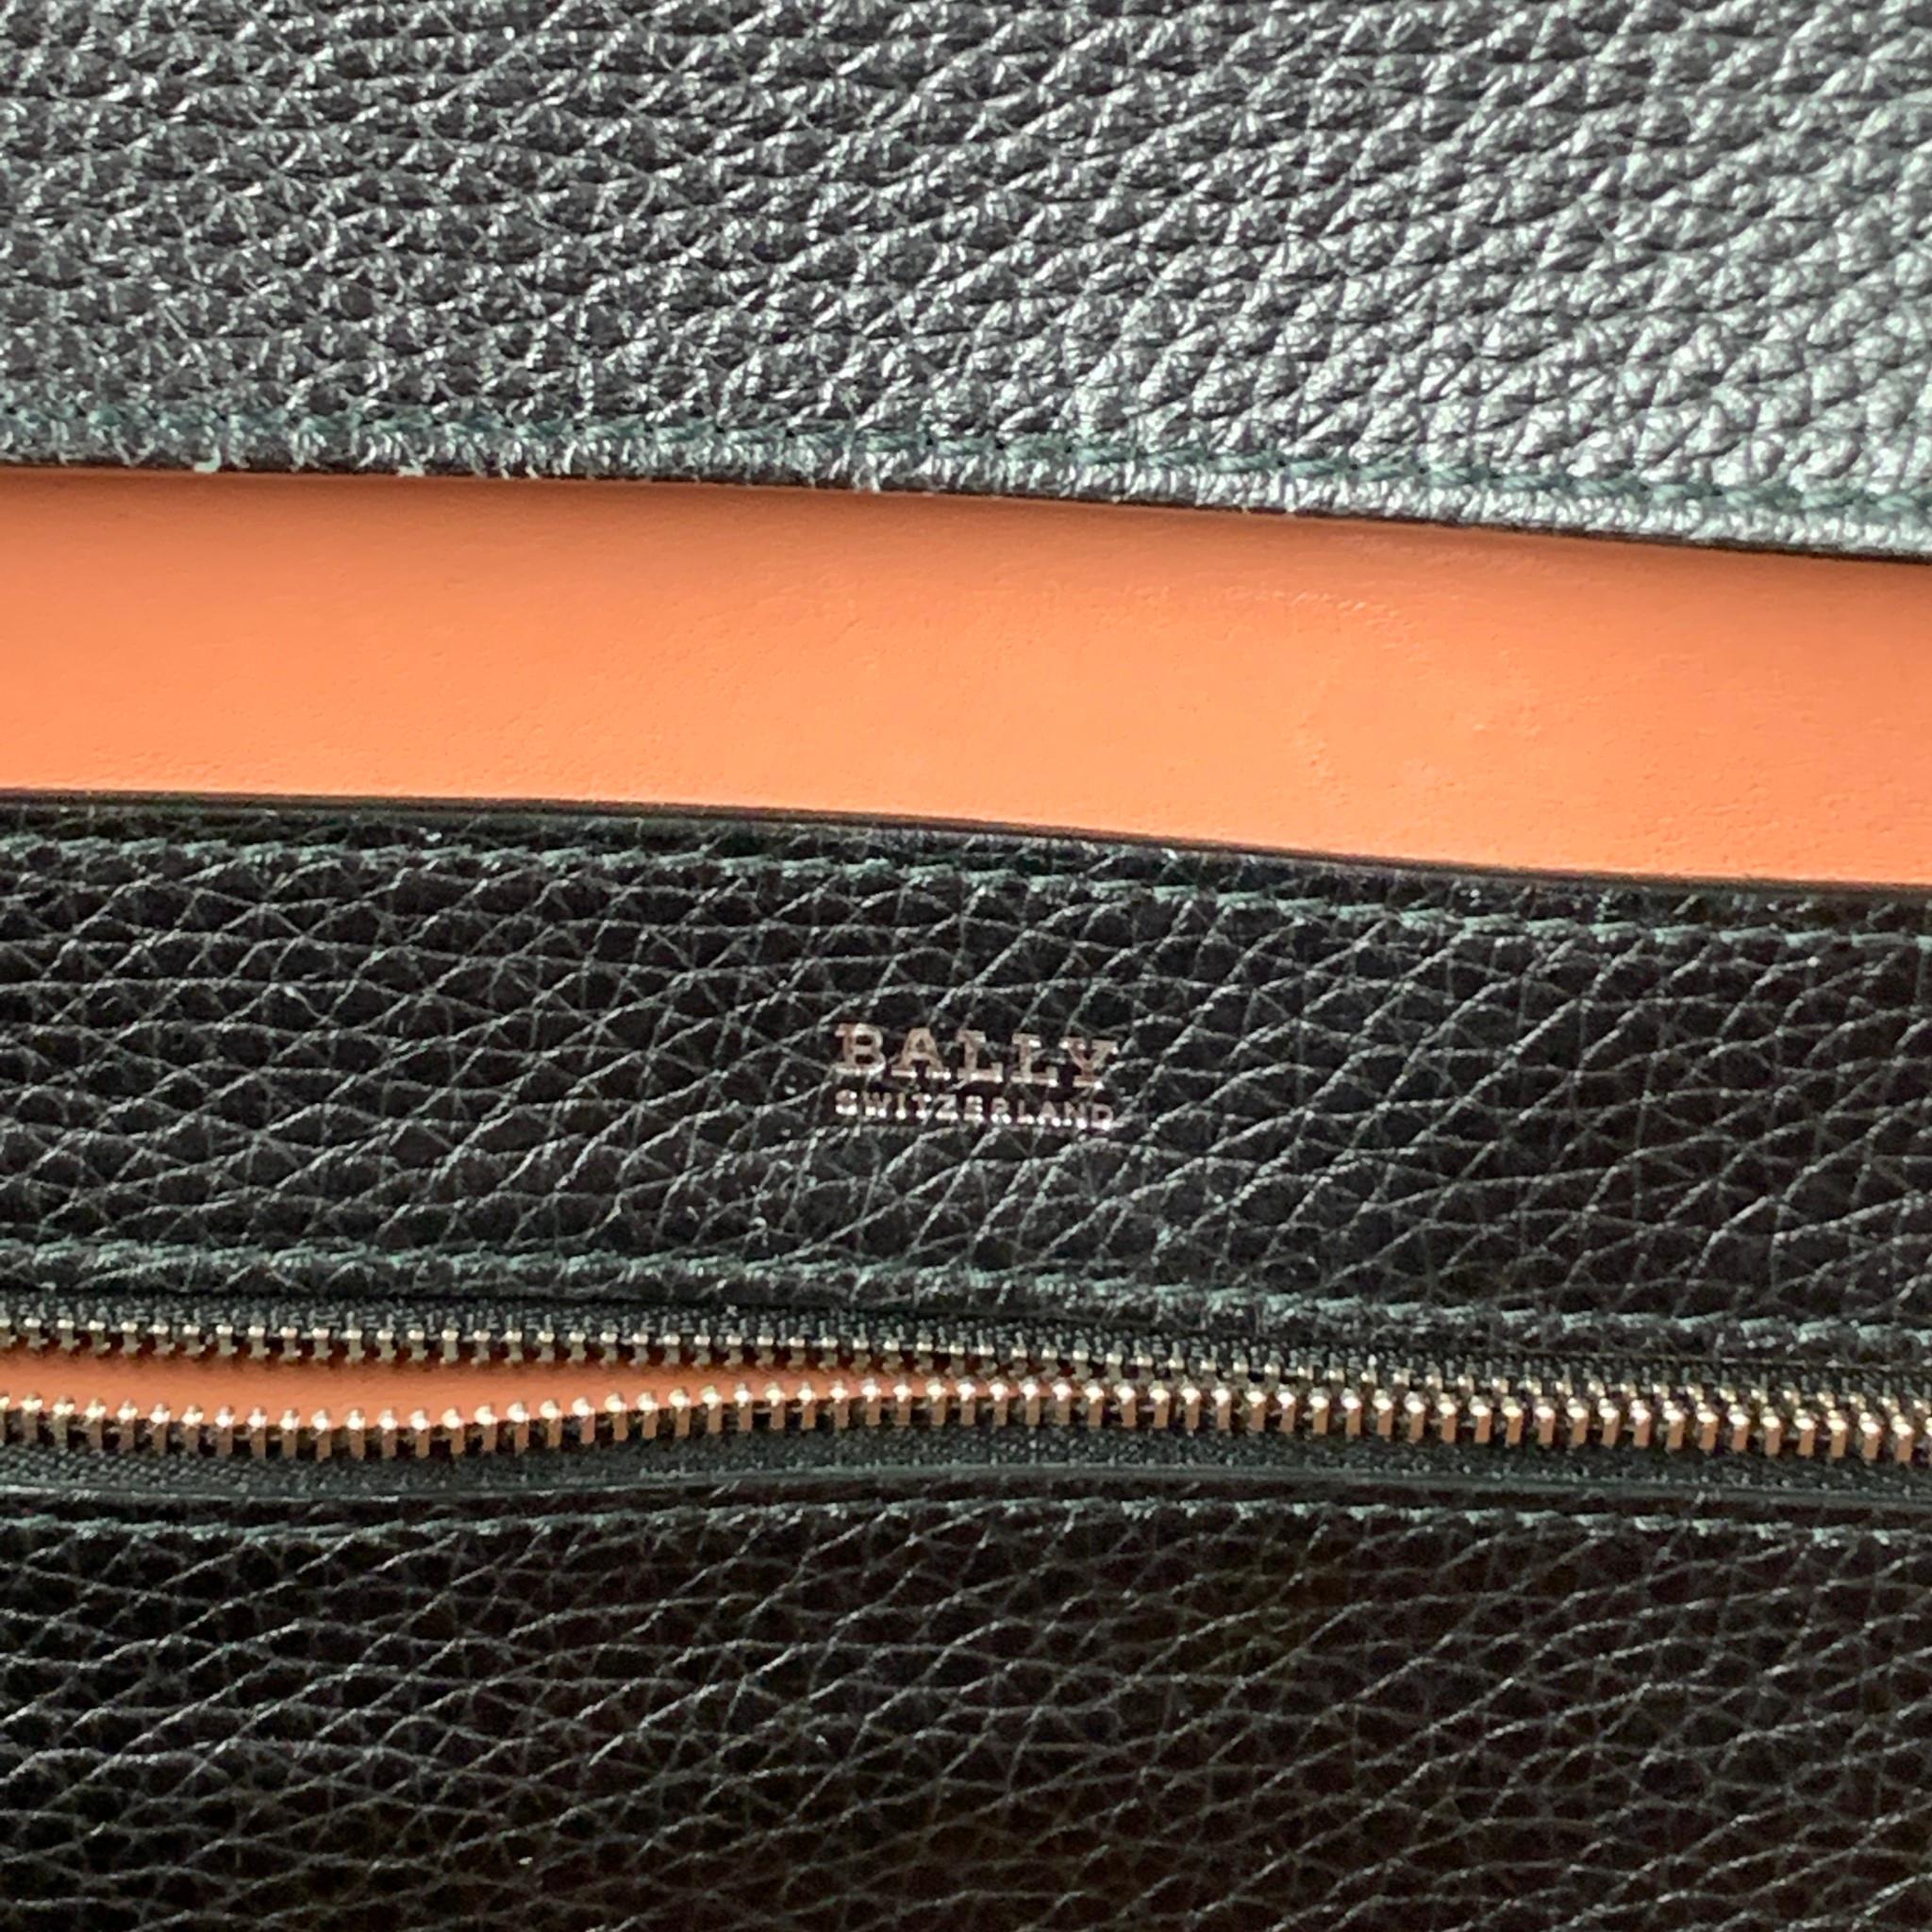 BALLY Black Pebble Grain Leather Top Handles Handbag 6